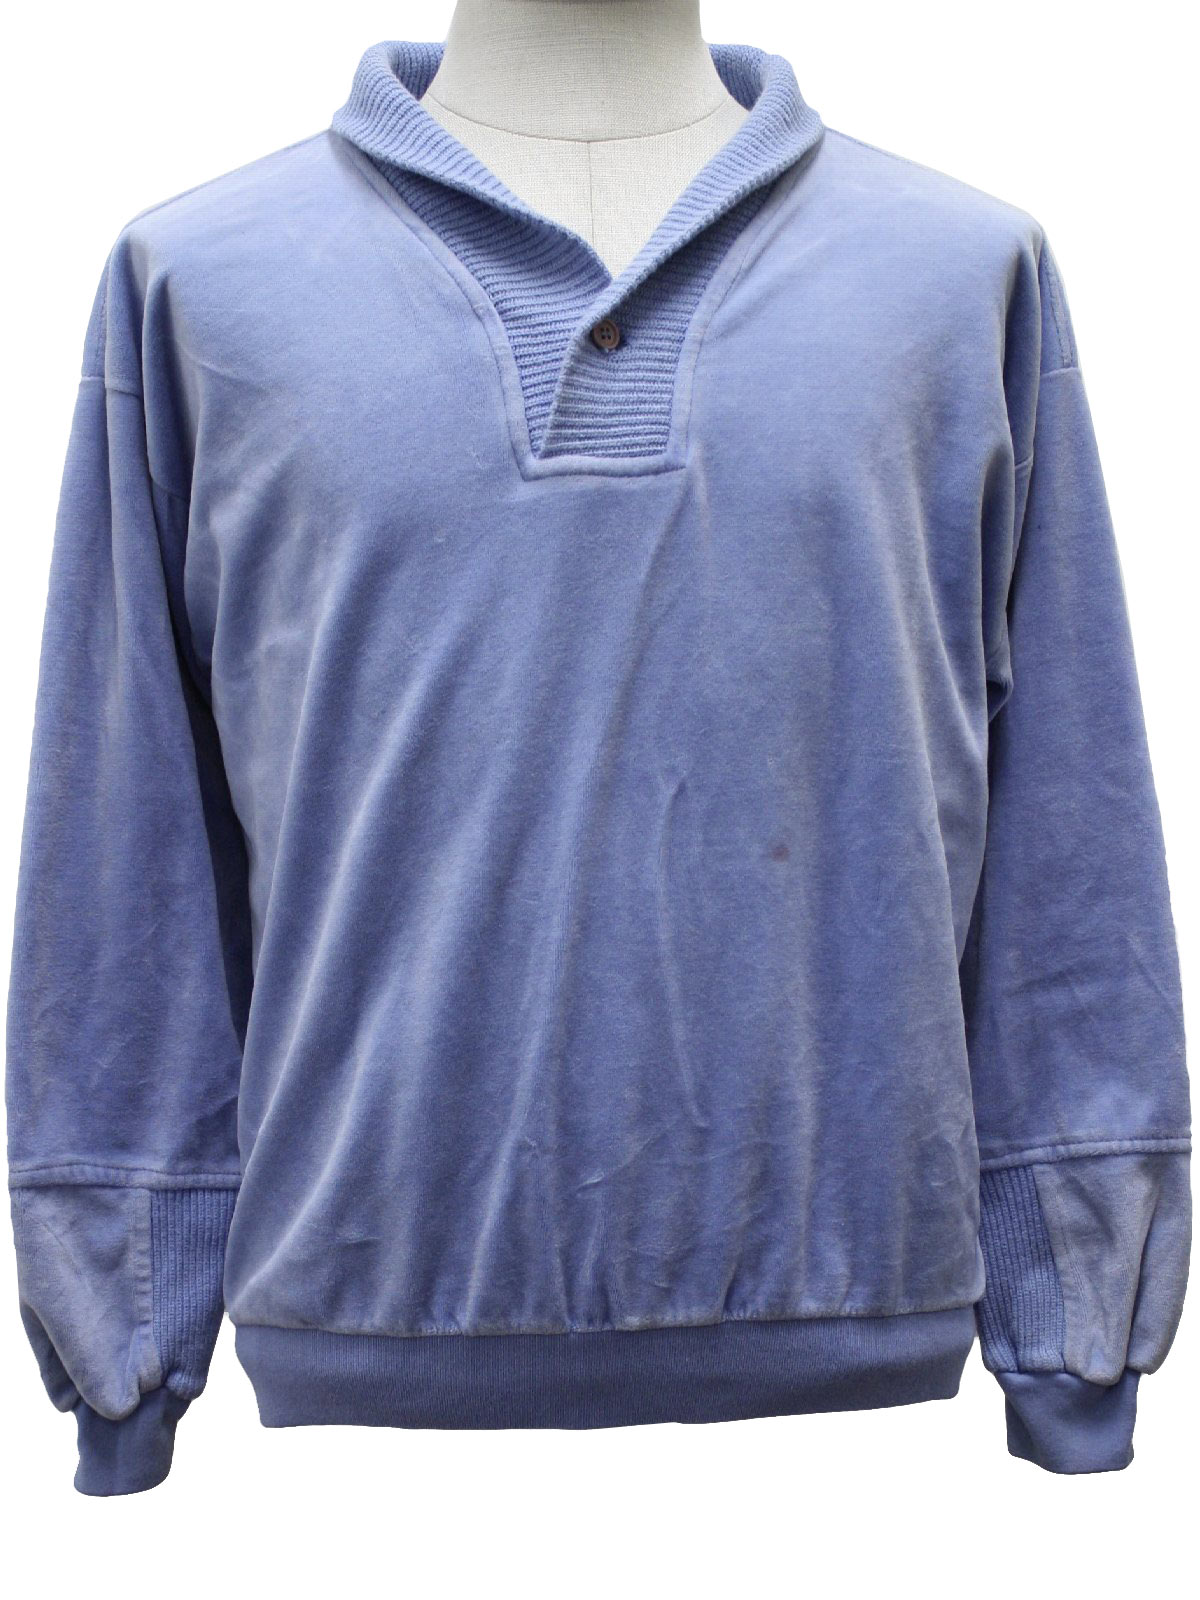 Eighties Vintage Velour Shirt: 80s -Mervyns- Mens light blue cotton and ...